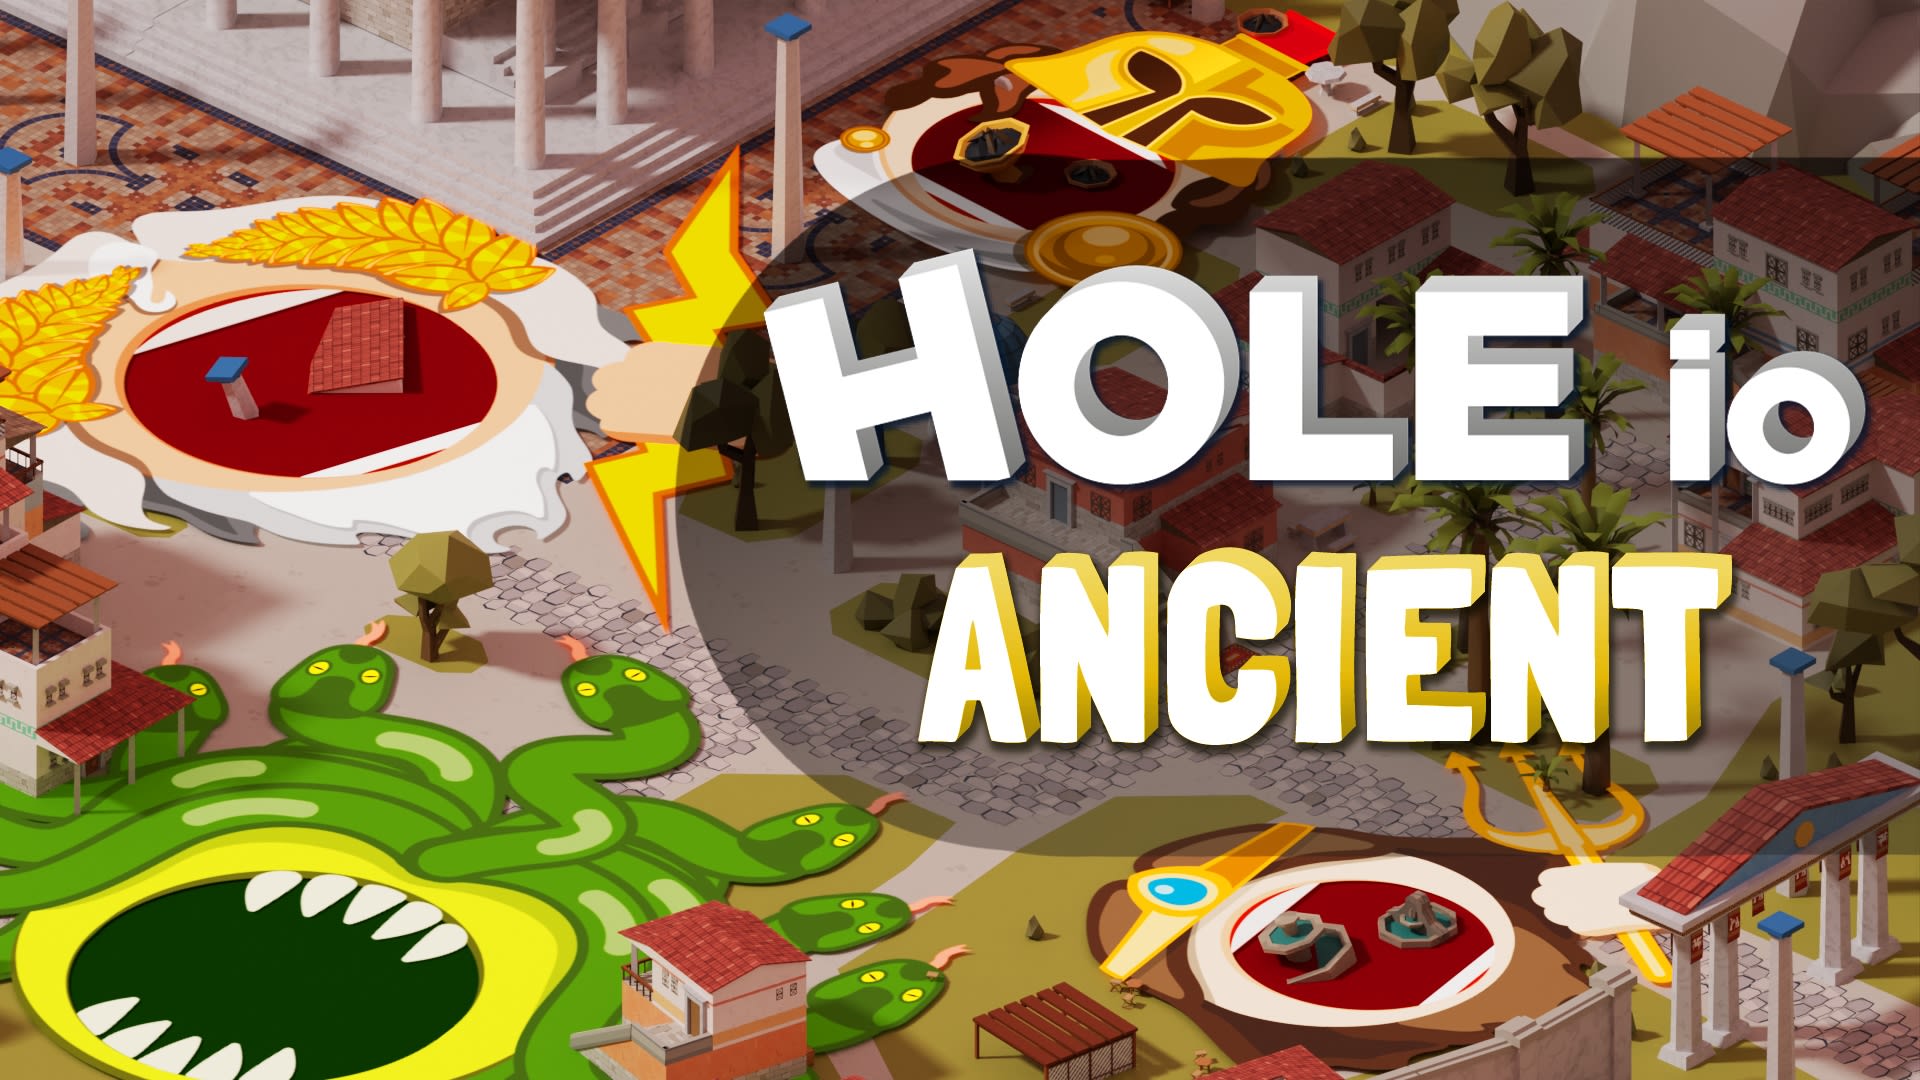 Hole io: Ancient DLC